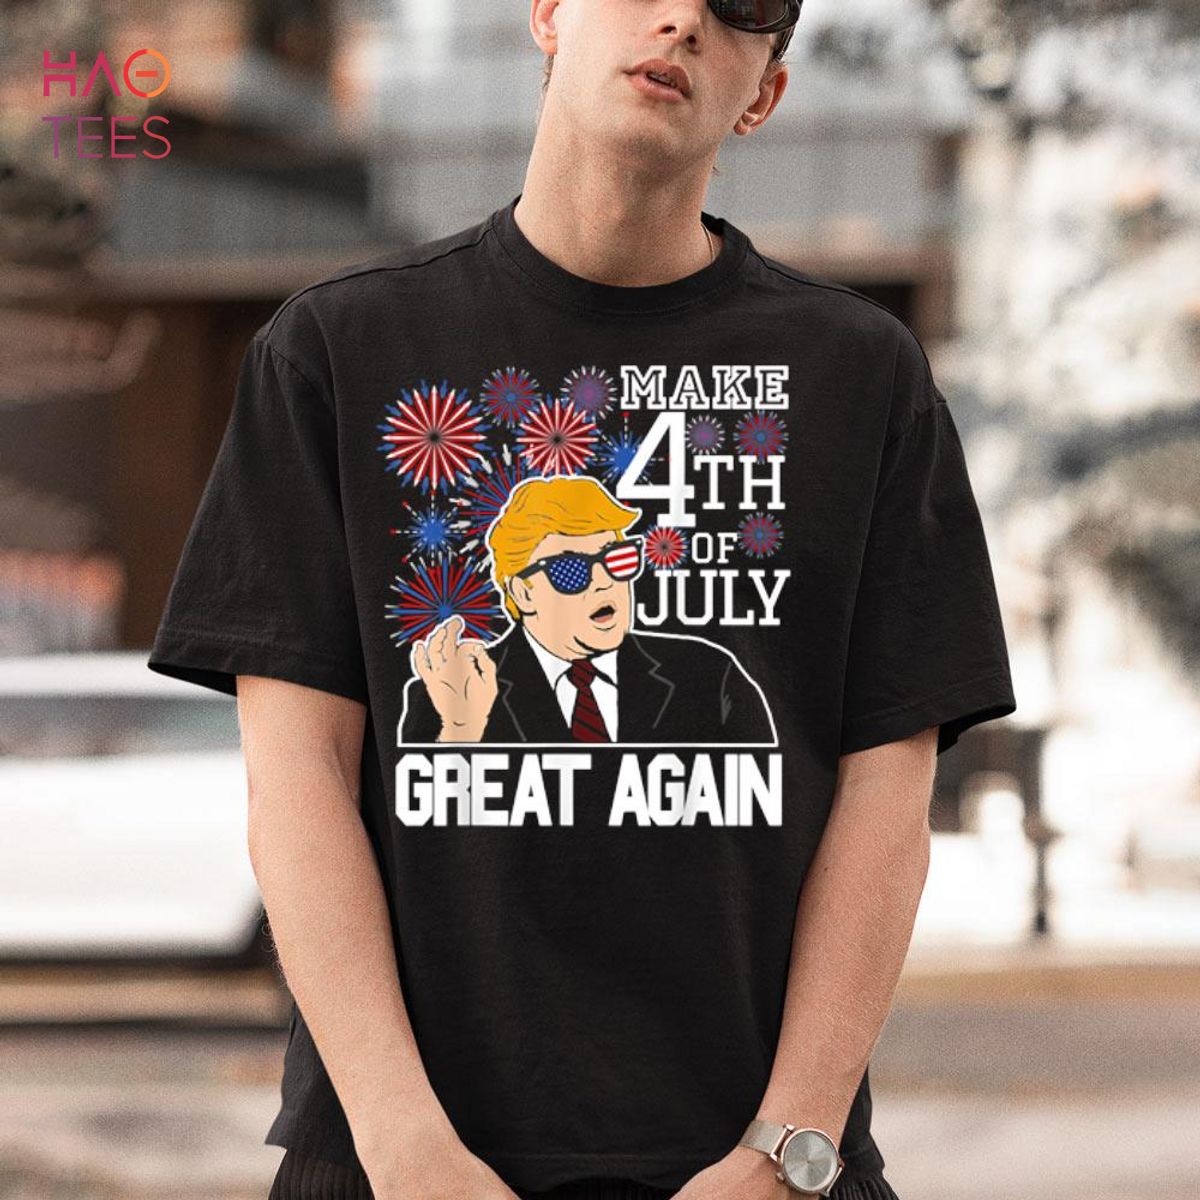 Make 4th of July Great Again Donald Trump, Pro-Trump Shirt